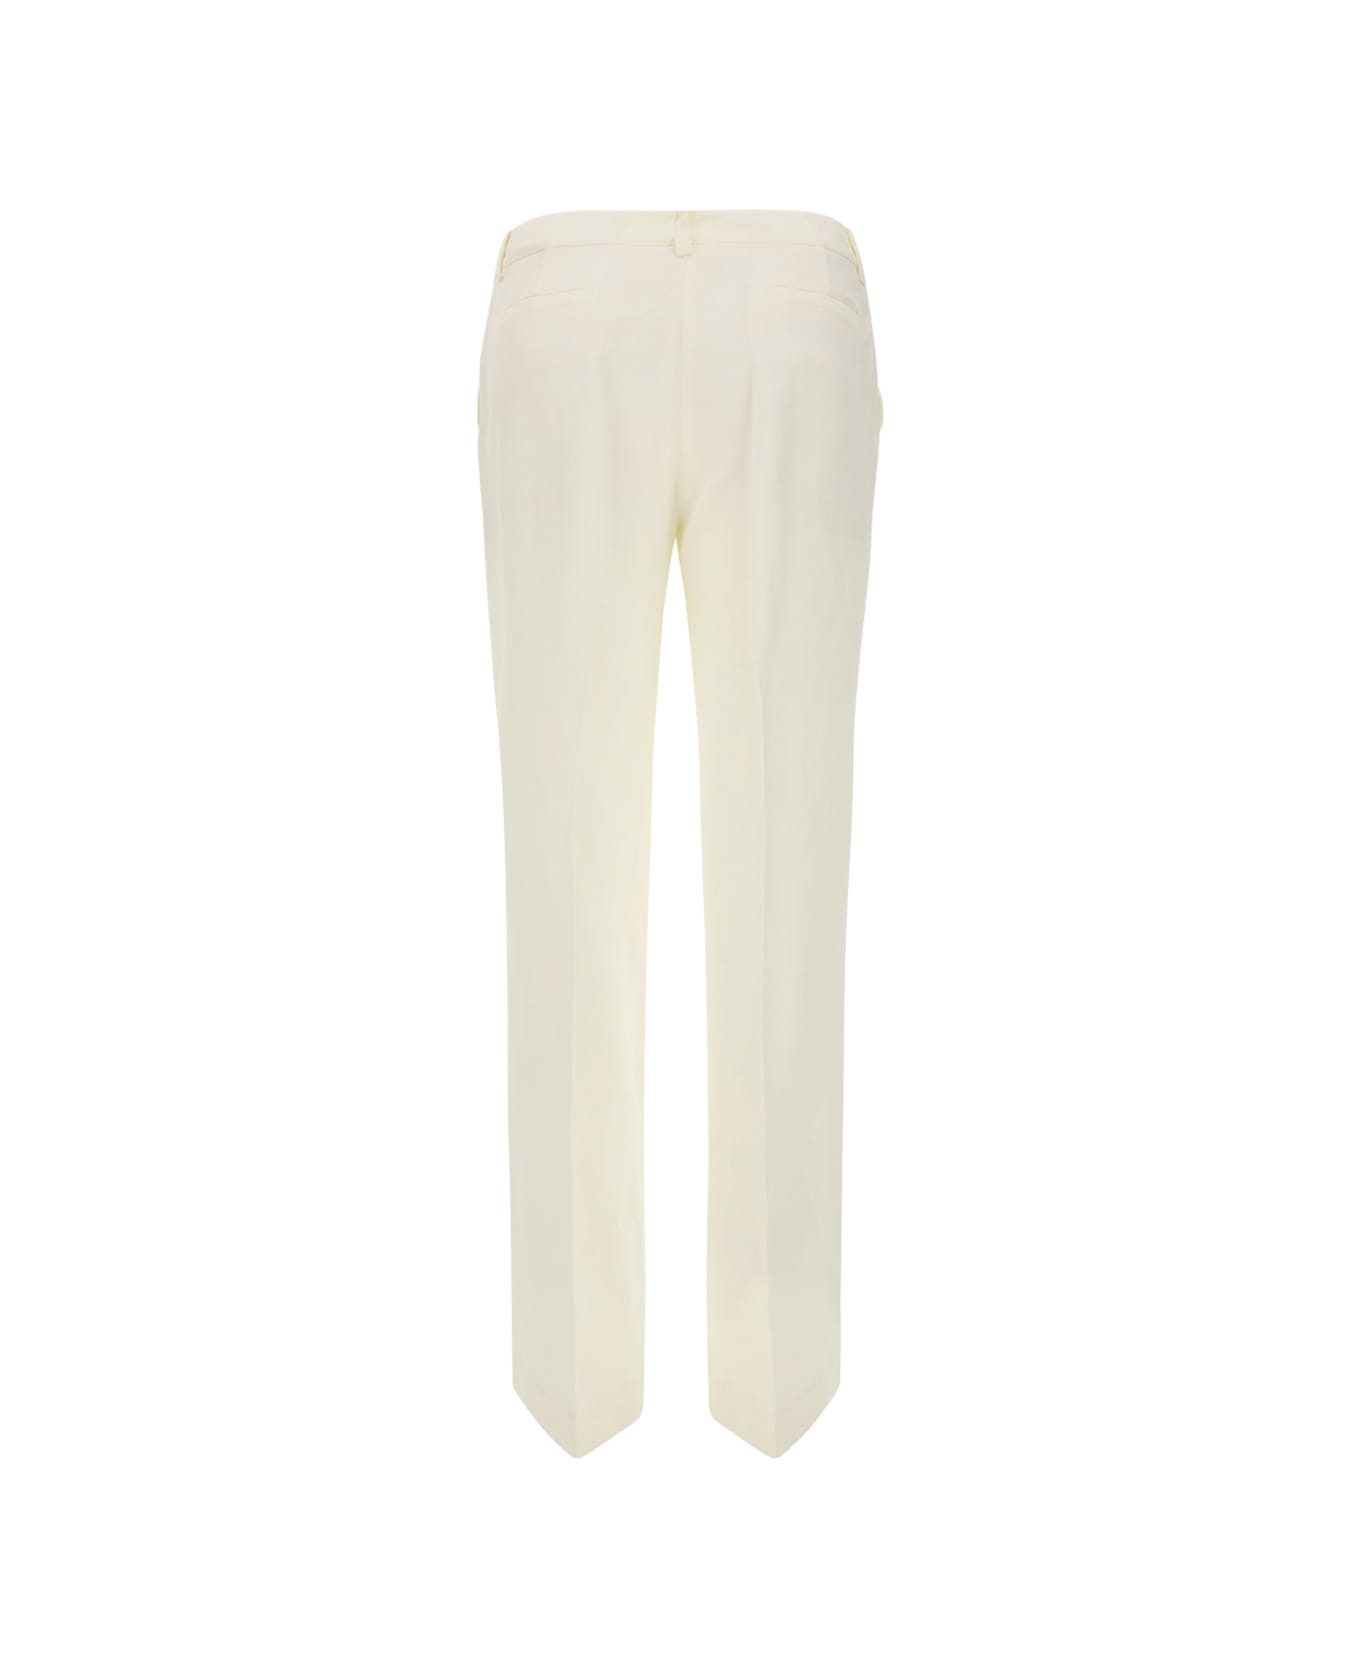 Parosh Classic Buttoned Trousers - Cream